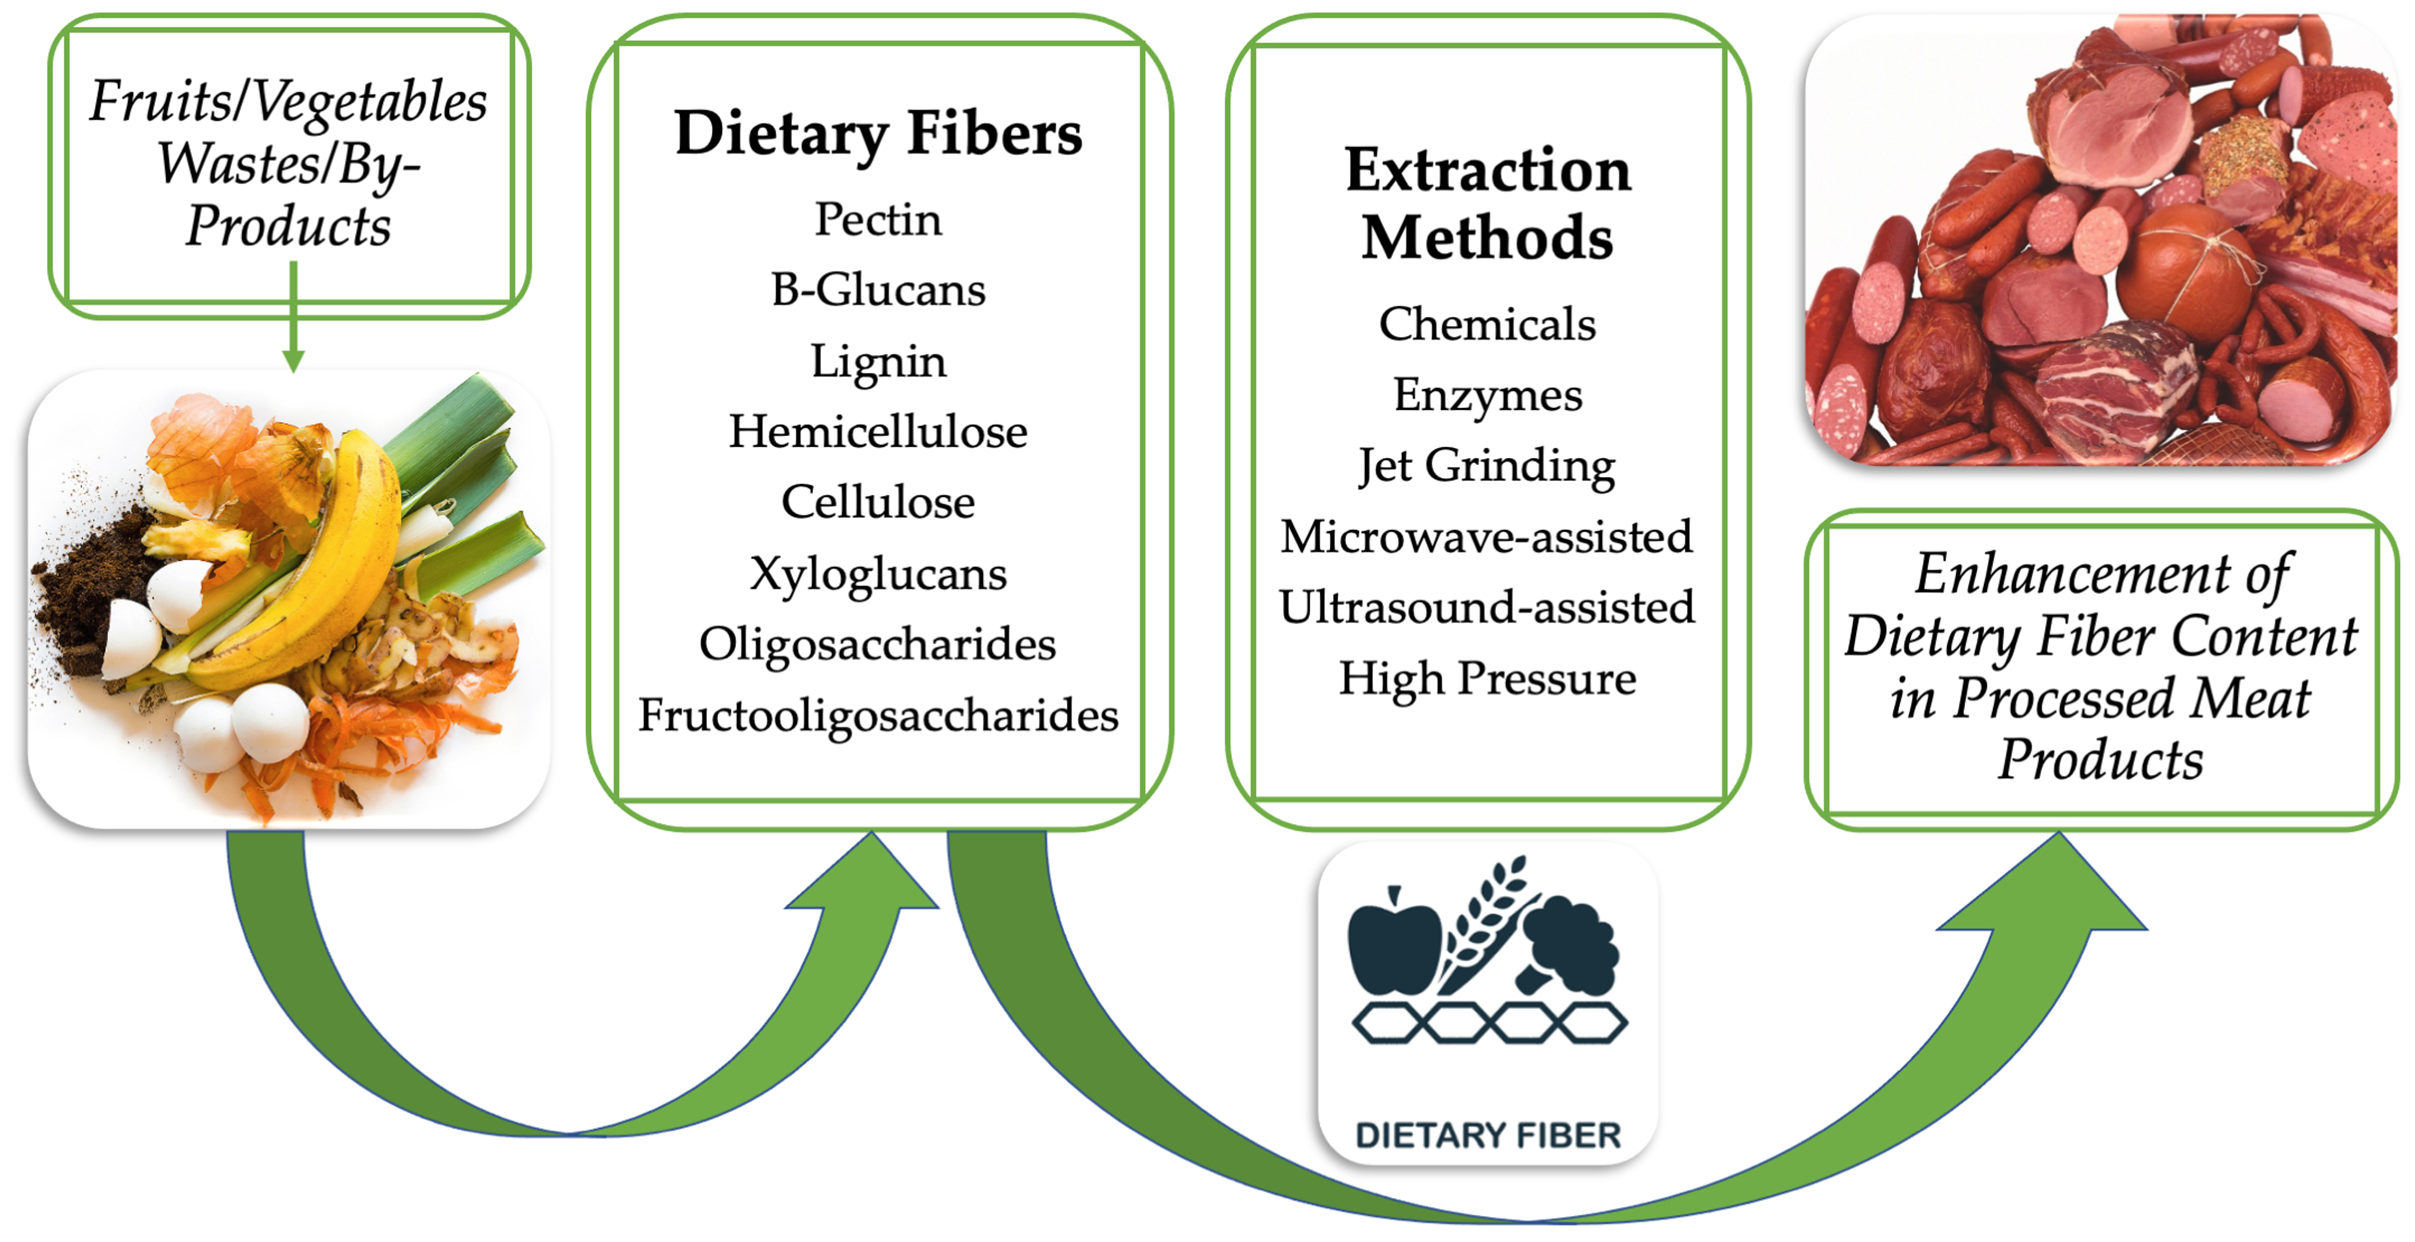 Incorporating fiber for cholesterol management